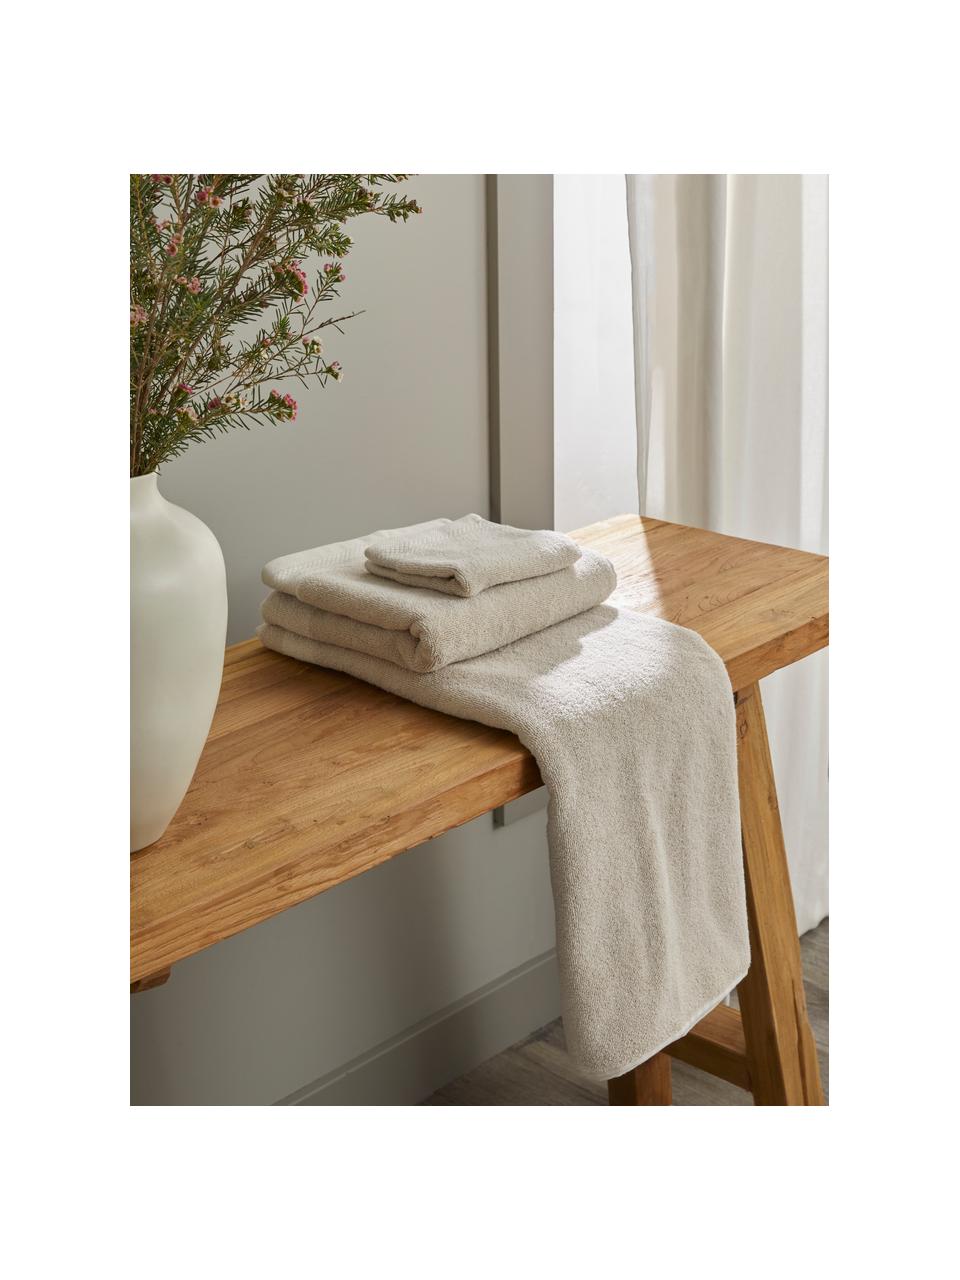 Set de toallas de algodón ecológico Premium, 3 uds., 100% algodón ecológico con certificado GOTS (por GCL International, GCL-300517)
Gramaje superior 600 g/m², Beige claro, Set de diferentes tamaños